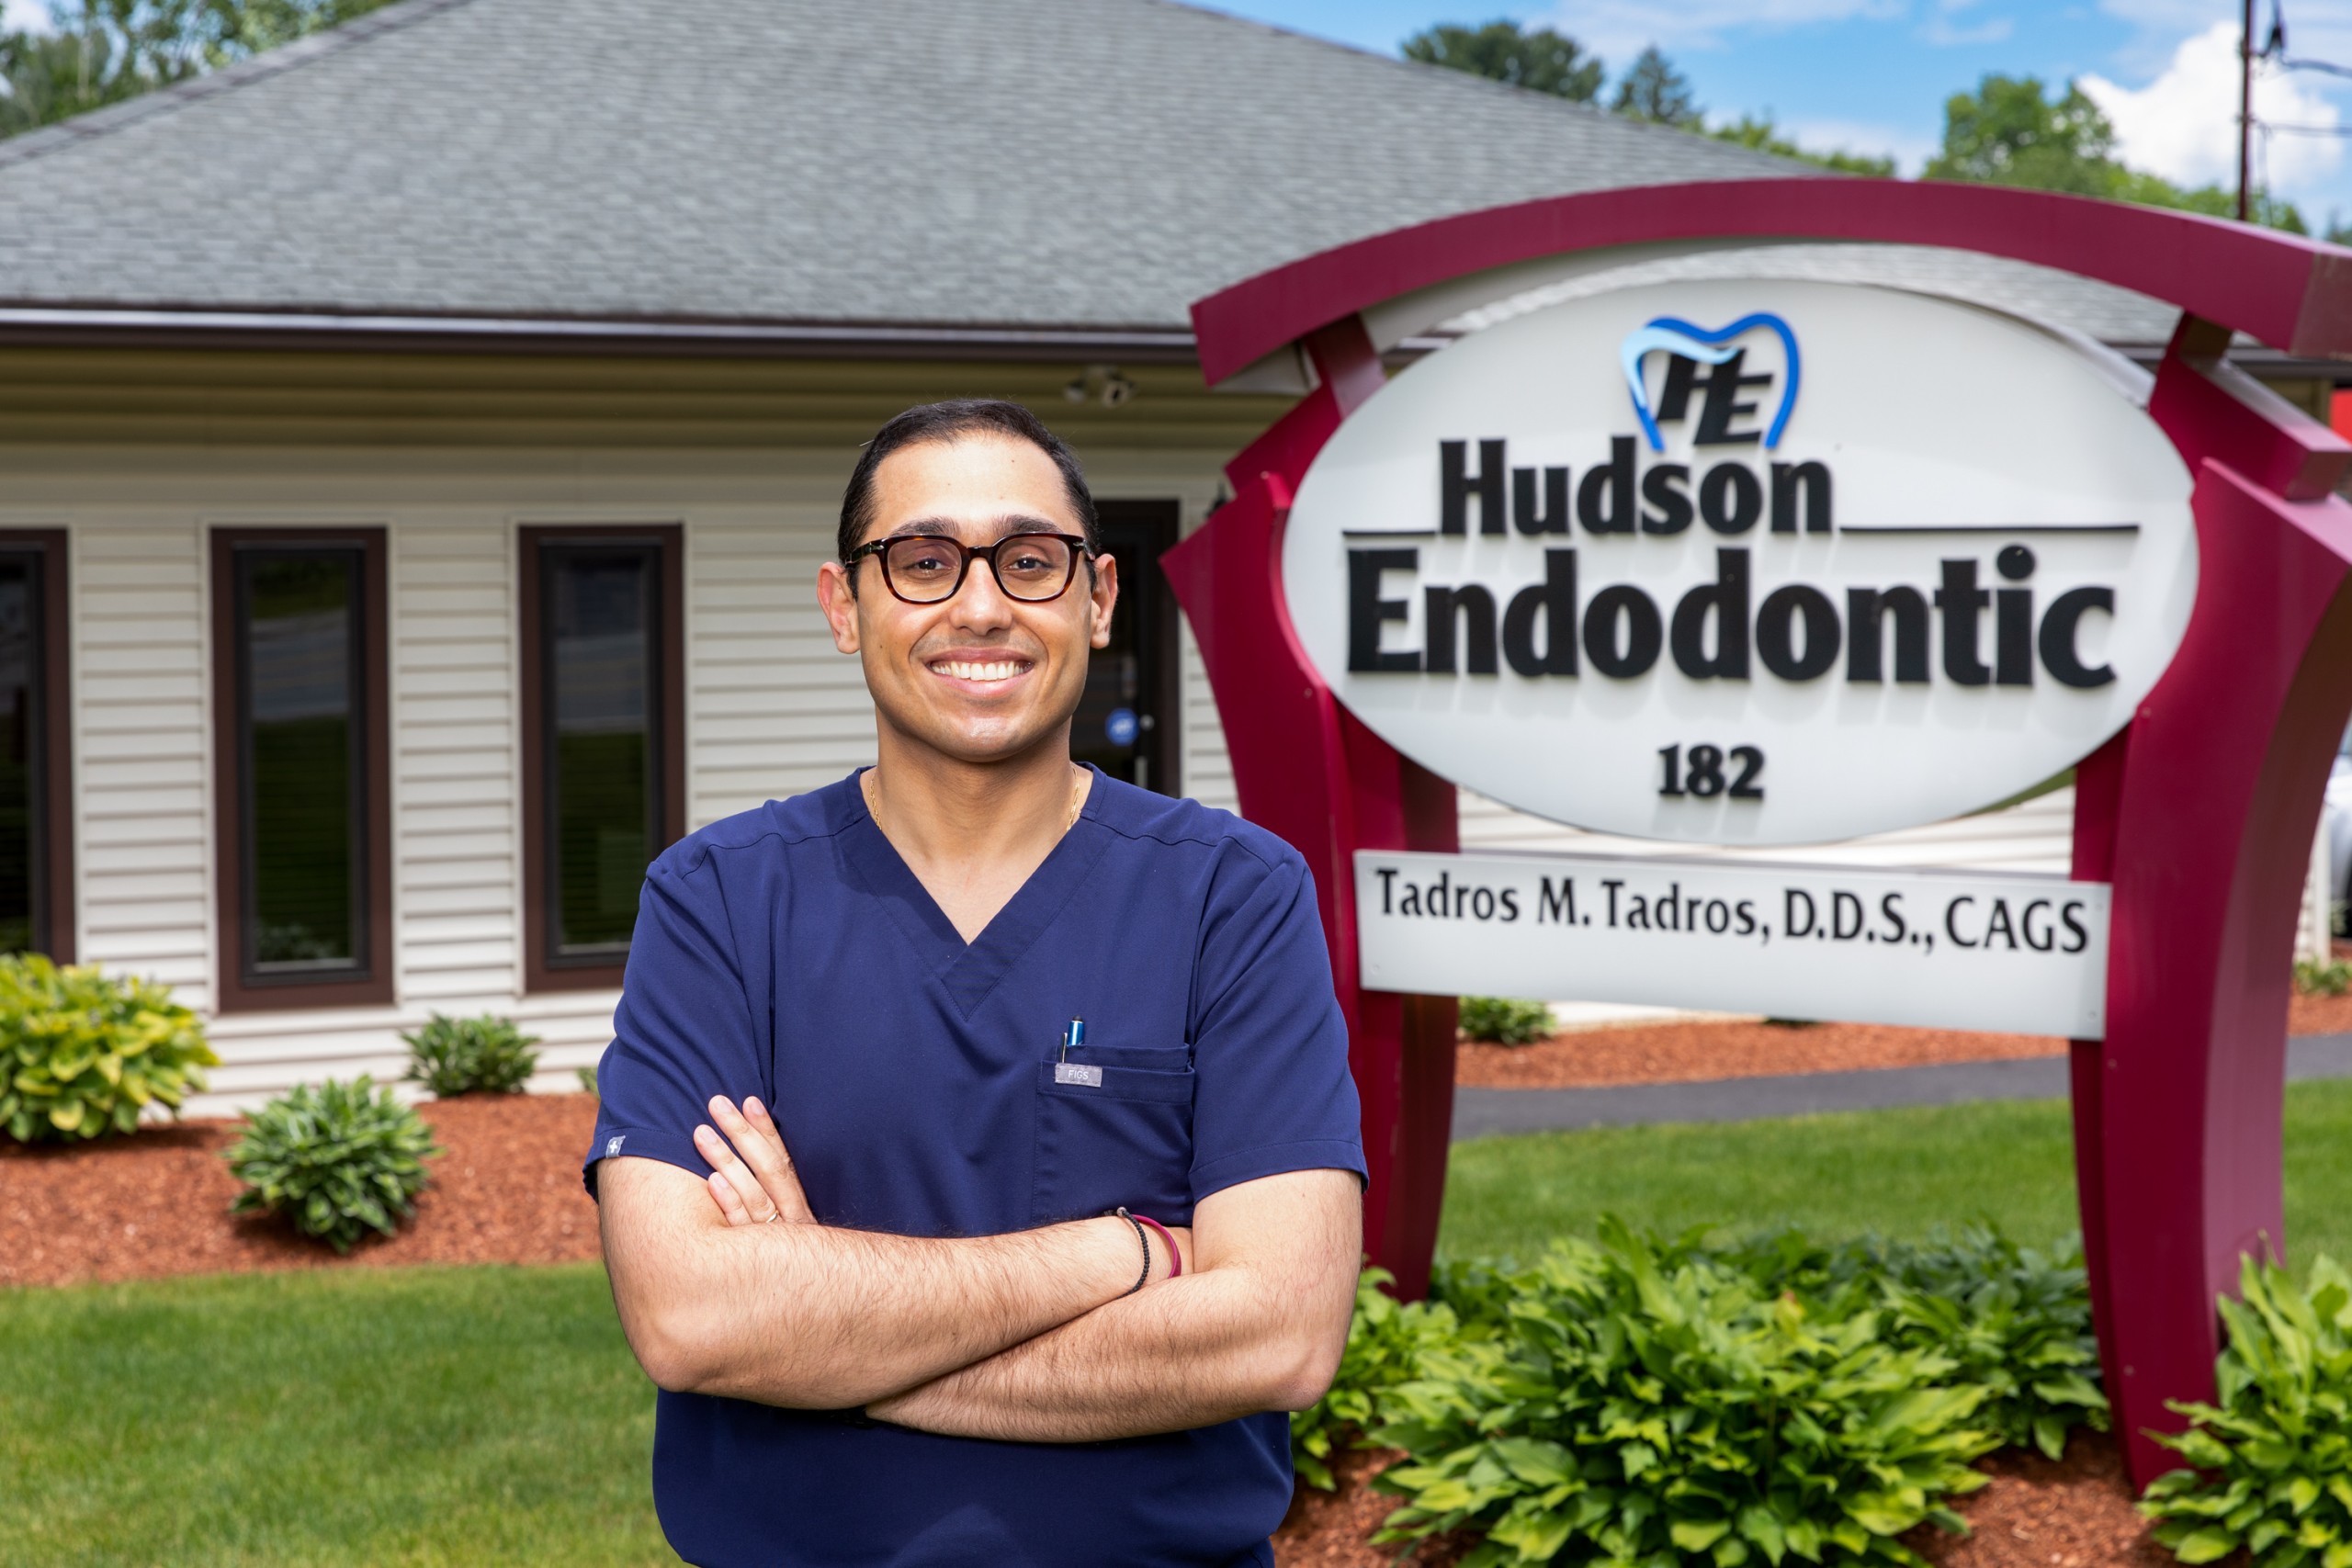 Hudson Endodontics: Dr. Tadros M. Tadros